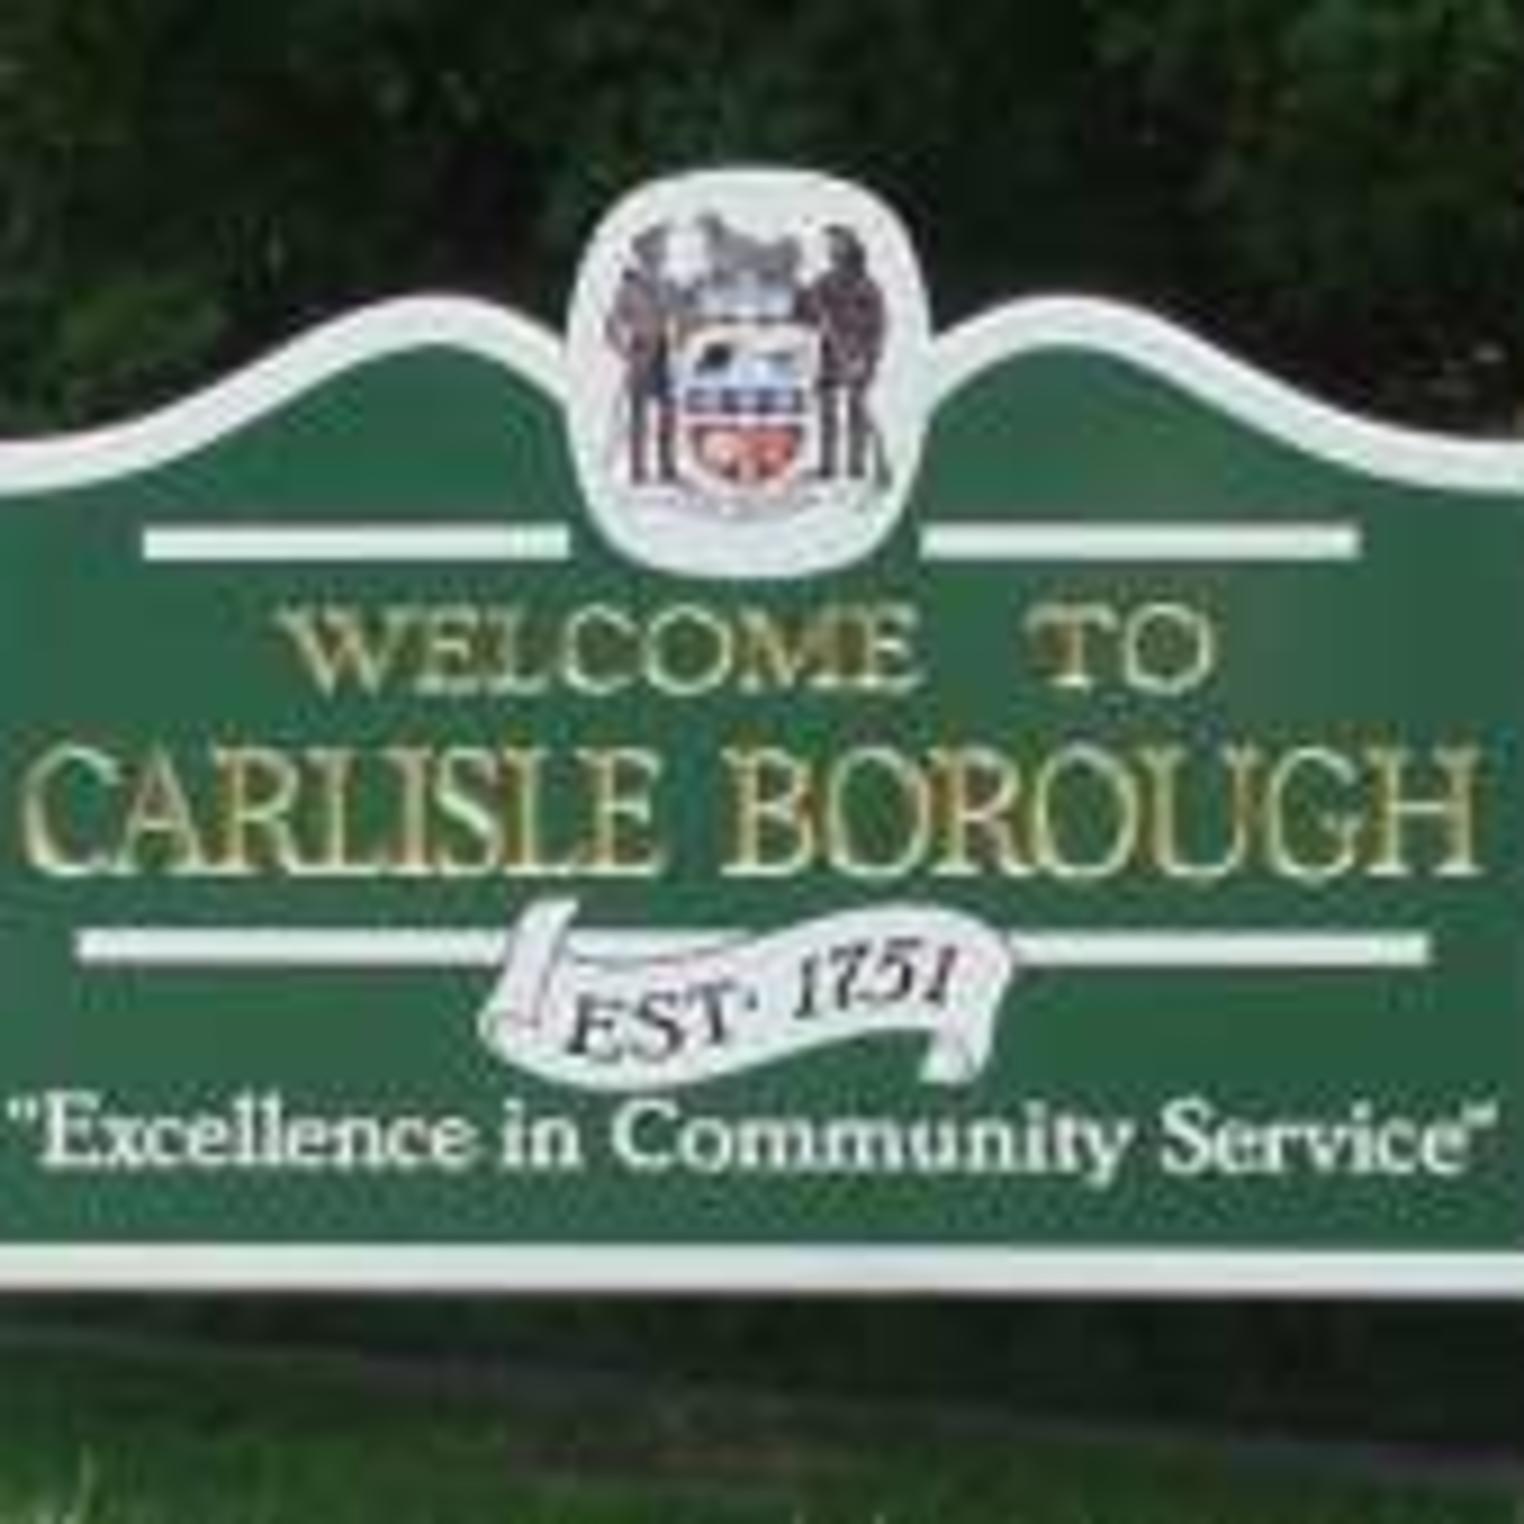 Carlisle Borough